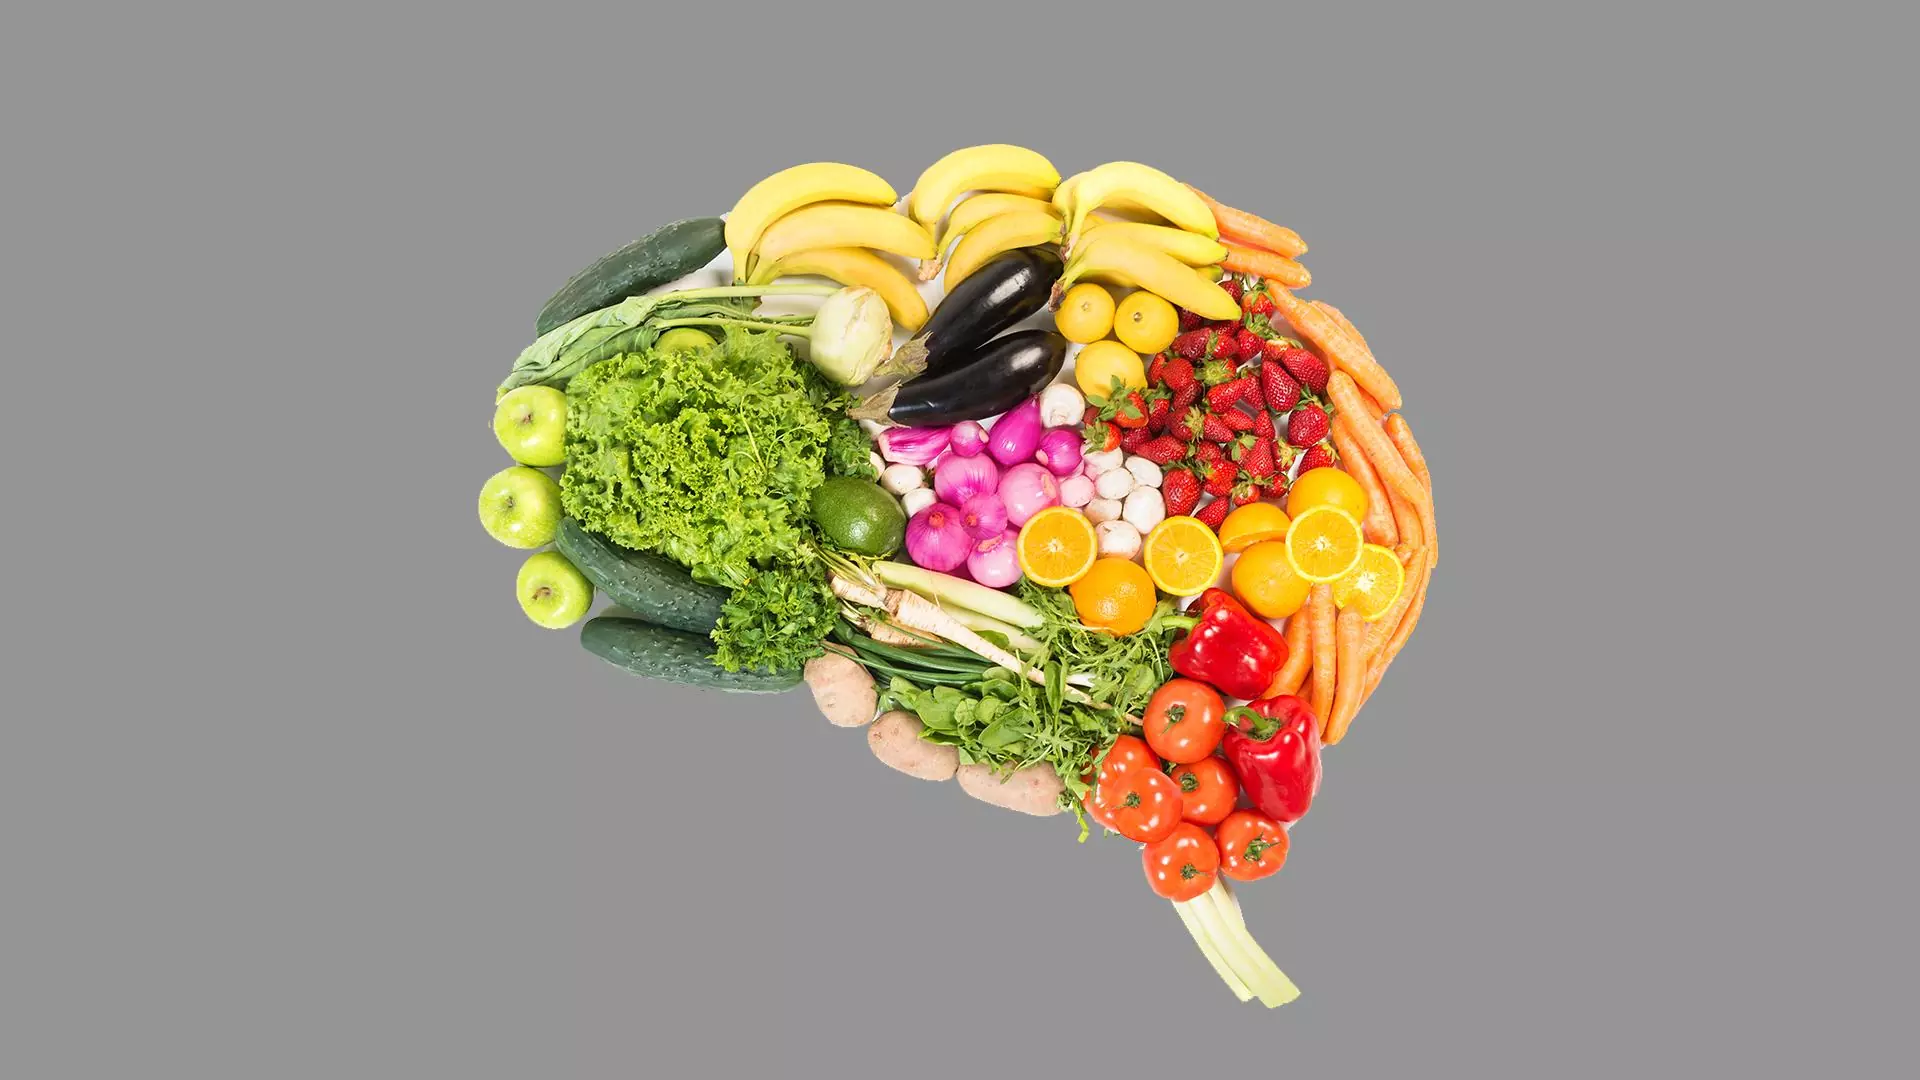 Brain Health Food